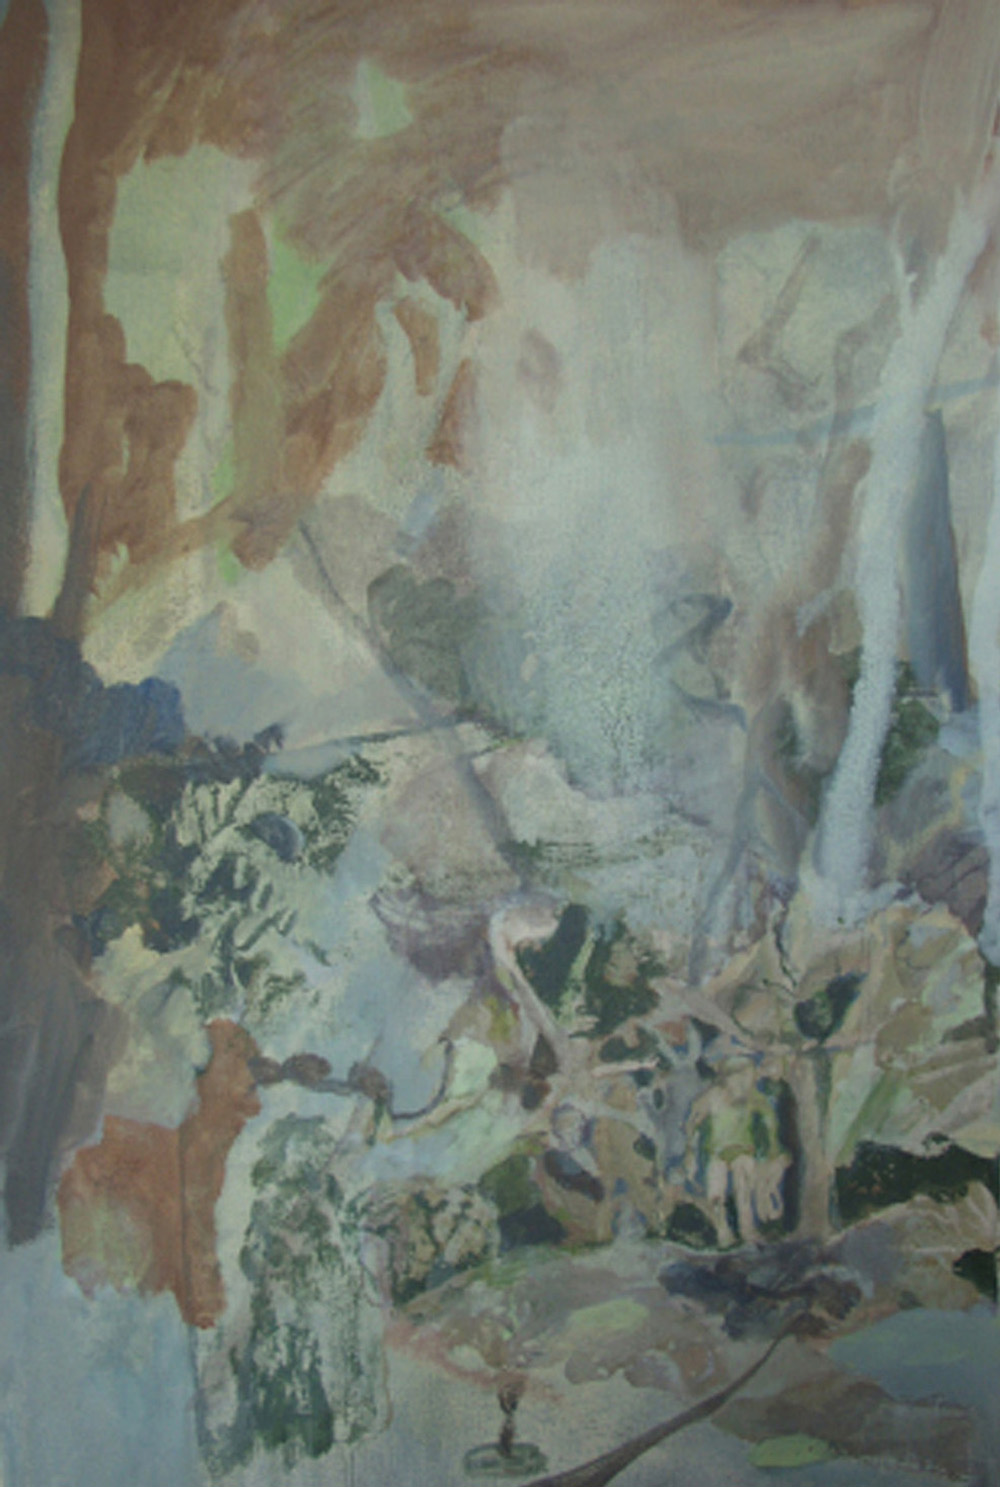 First Painting (title TBC), 2009. Acrylic on canvas
60 x 40 cms, 23 5/8 x 15 3/4 ins. Thomas Hylander